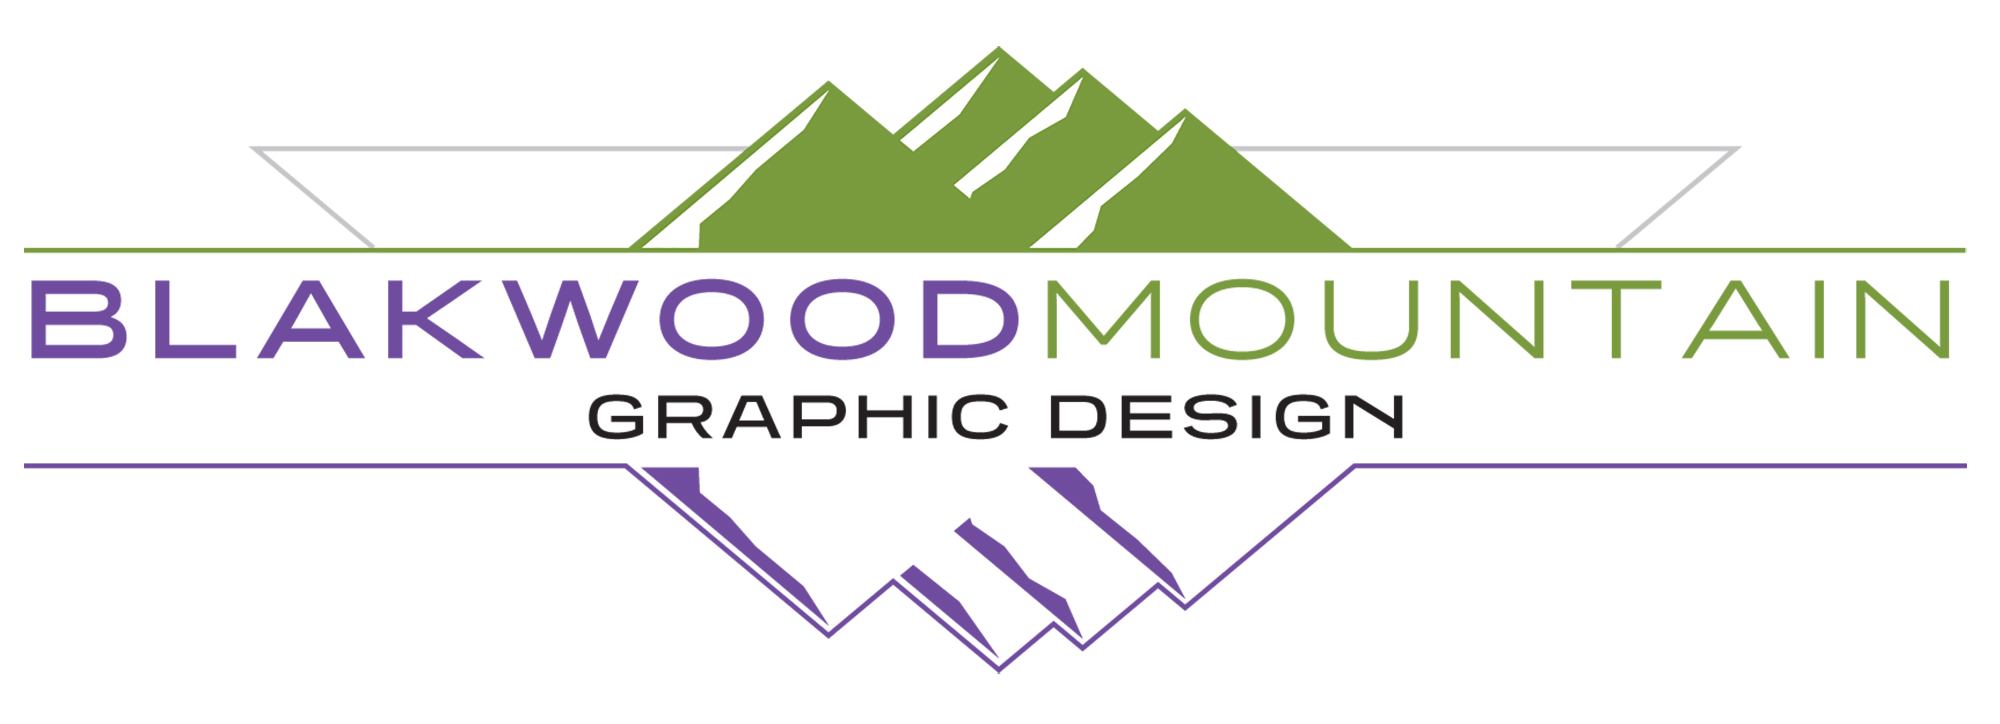 Blakwood Mountain Graphic Design